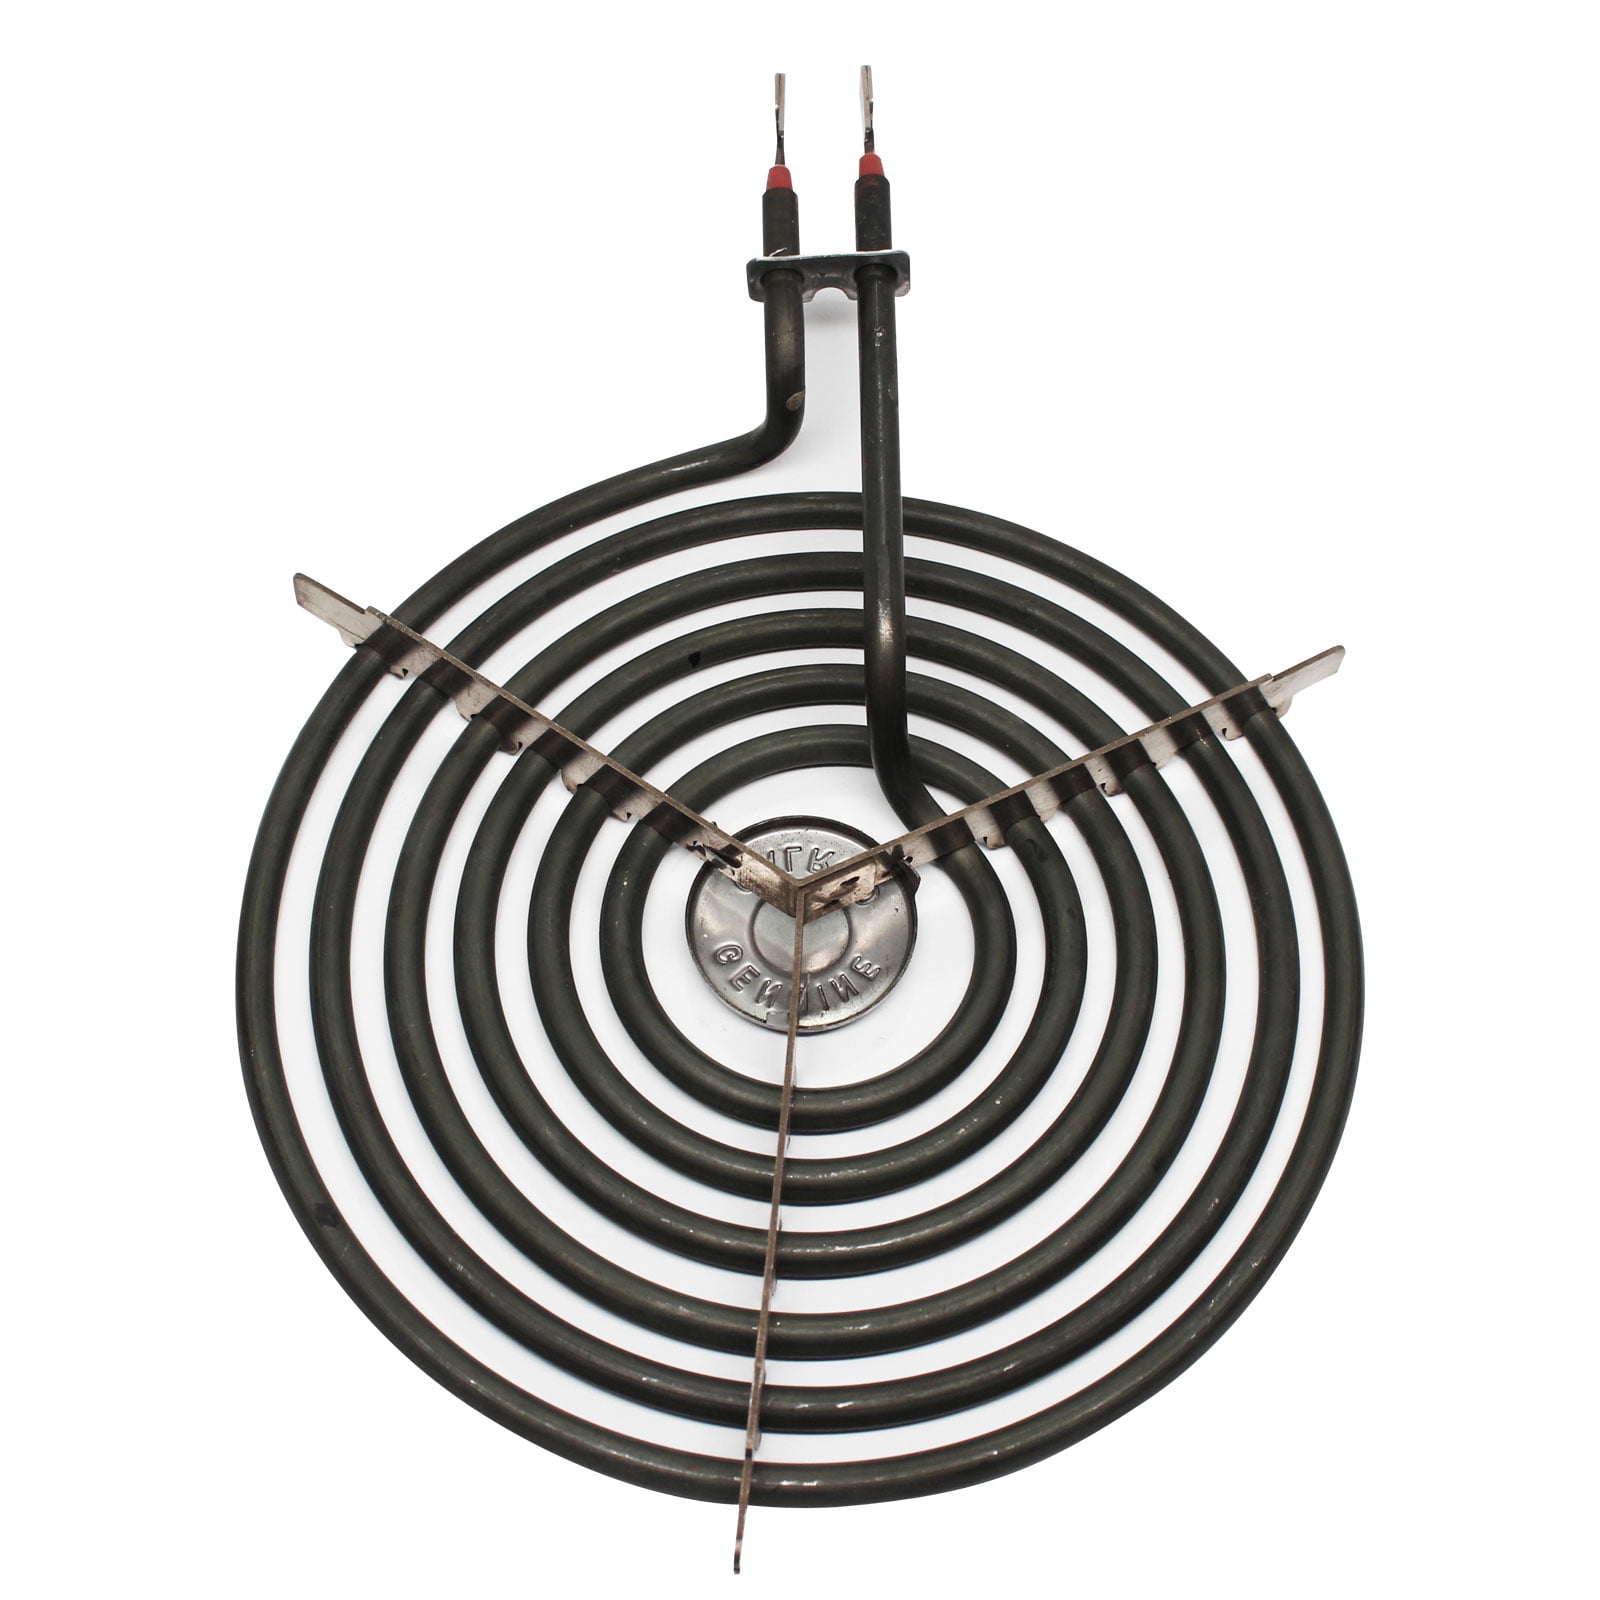 4315620 Roper 8" Range Cooktop Stove Heating Element for sale online 